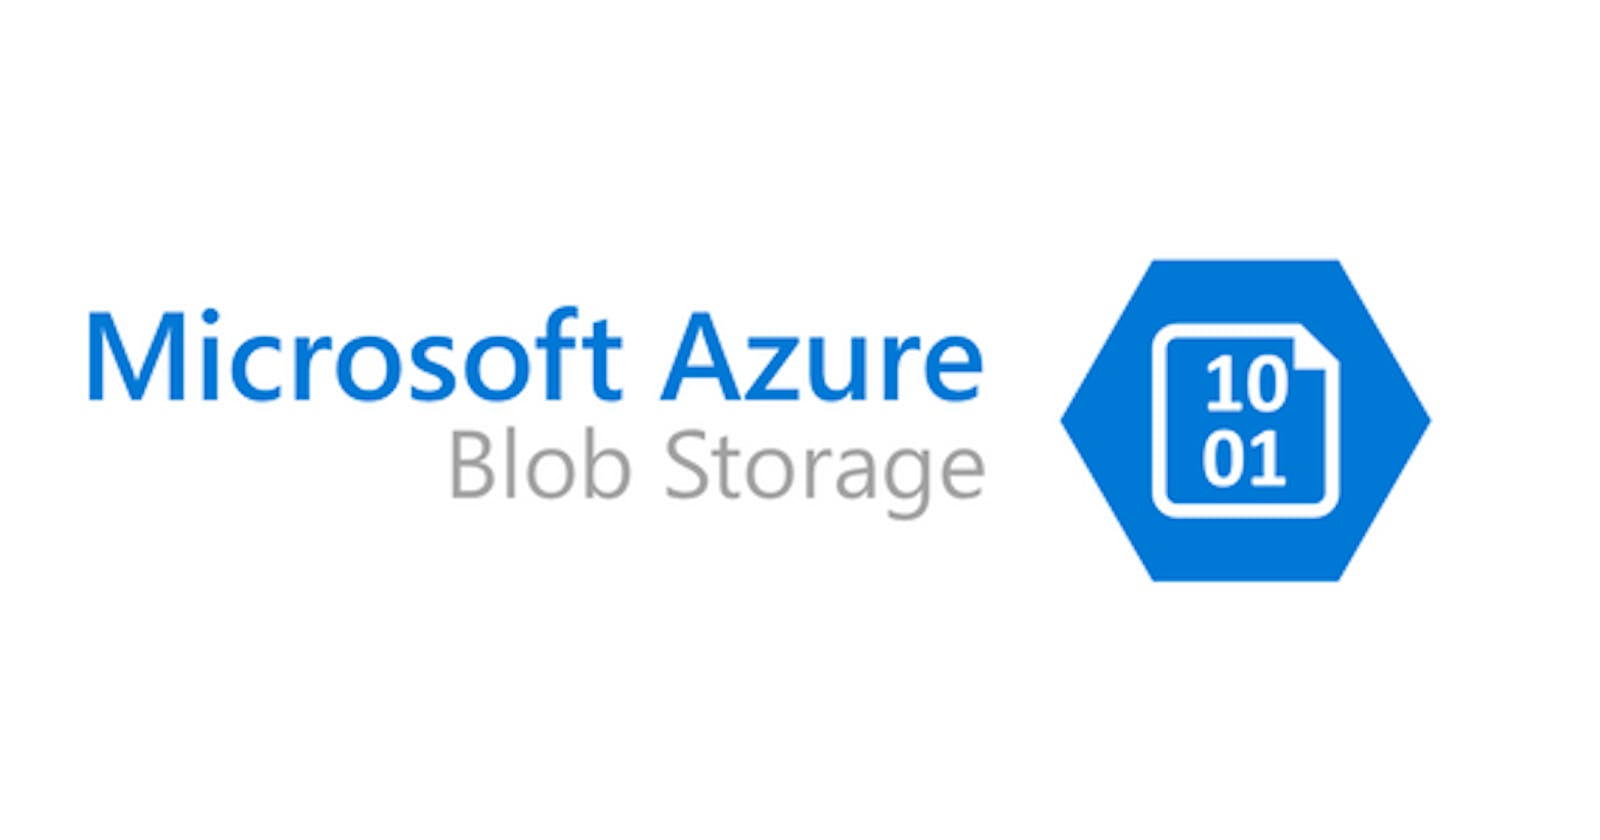 Using Azure SDK for Blob Storage